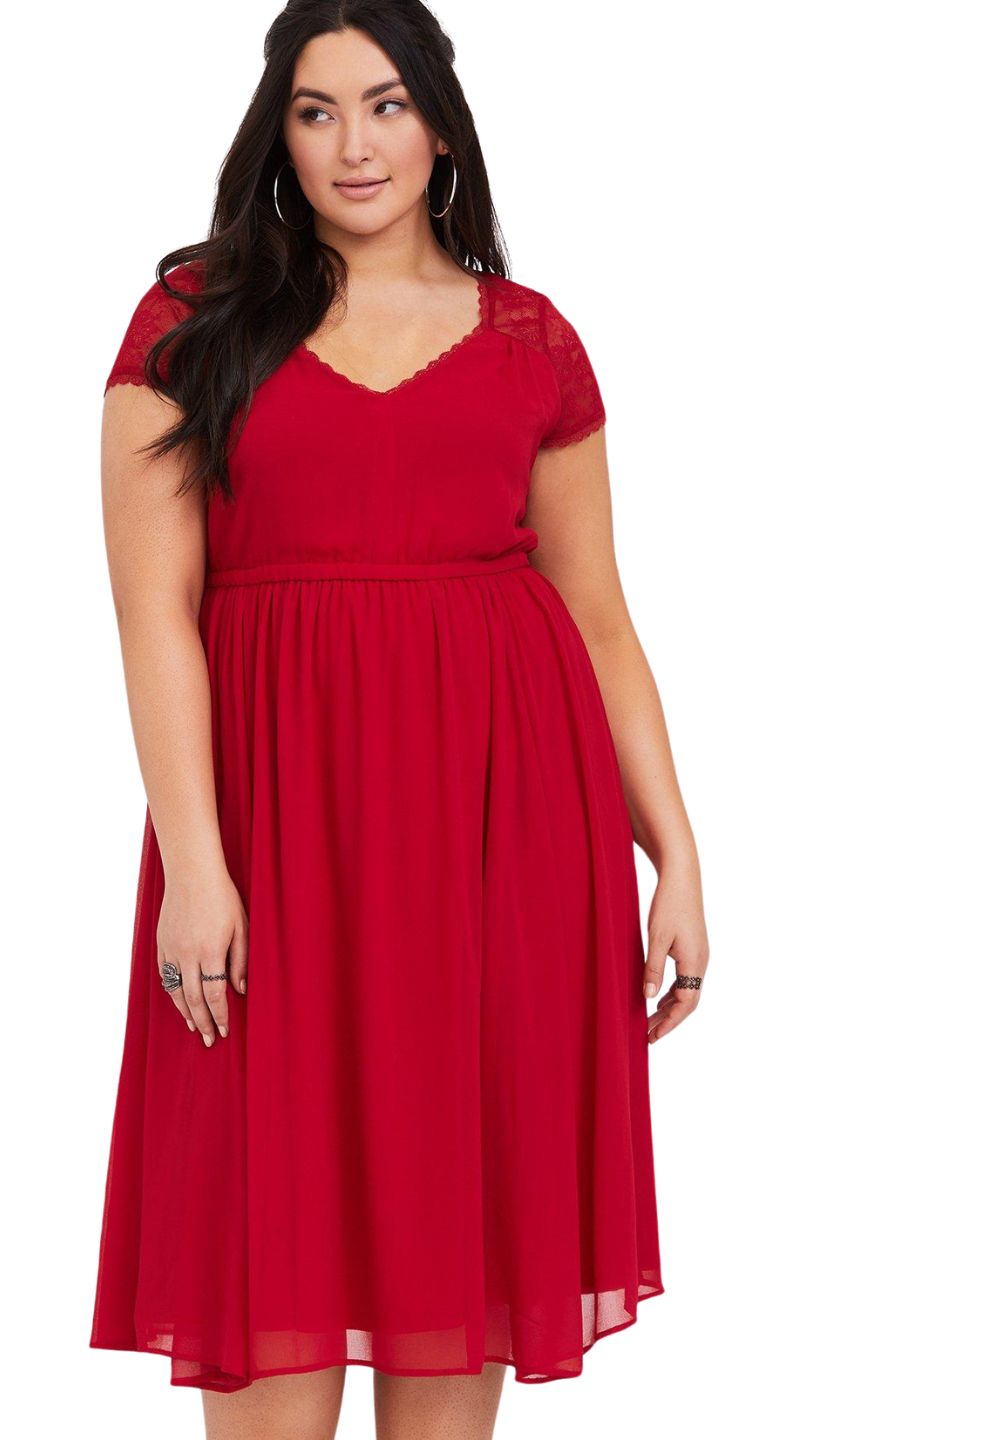 Torrid Midi Chiffon Red Lace Inserts Dress, Size 30